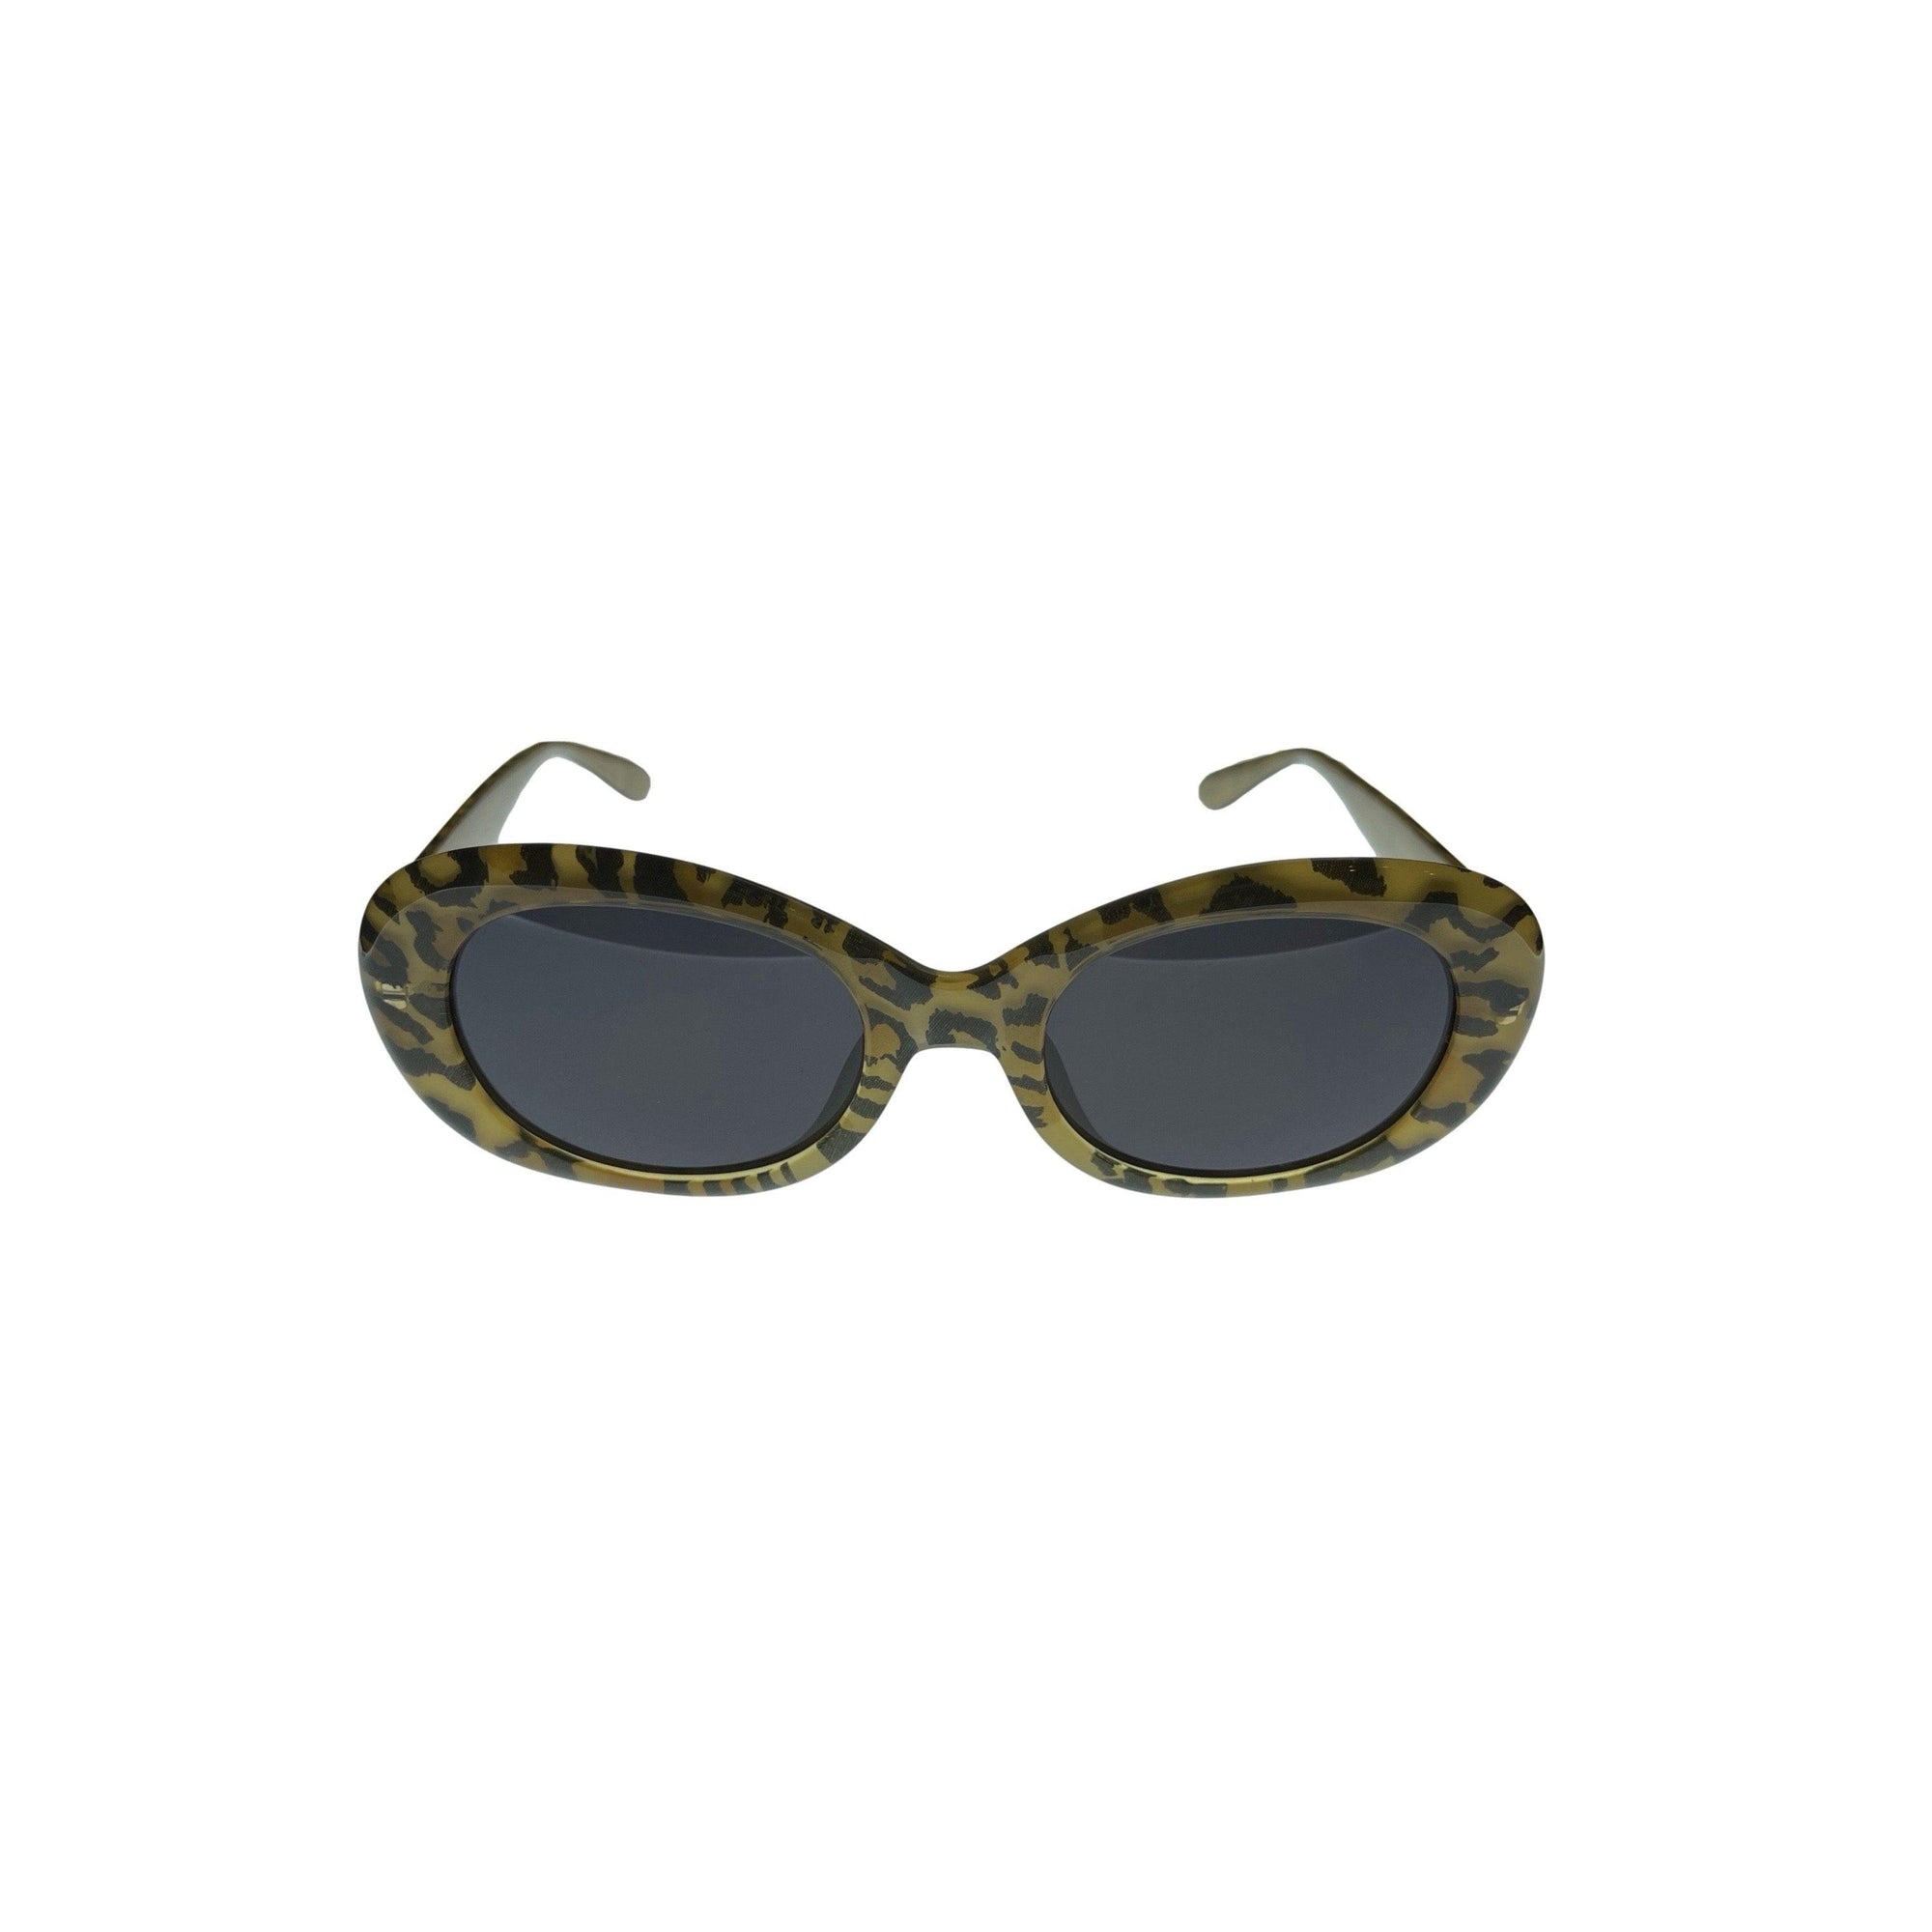 Dior Cheetah Round Sunglasses - Sunglasses